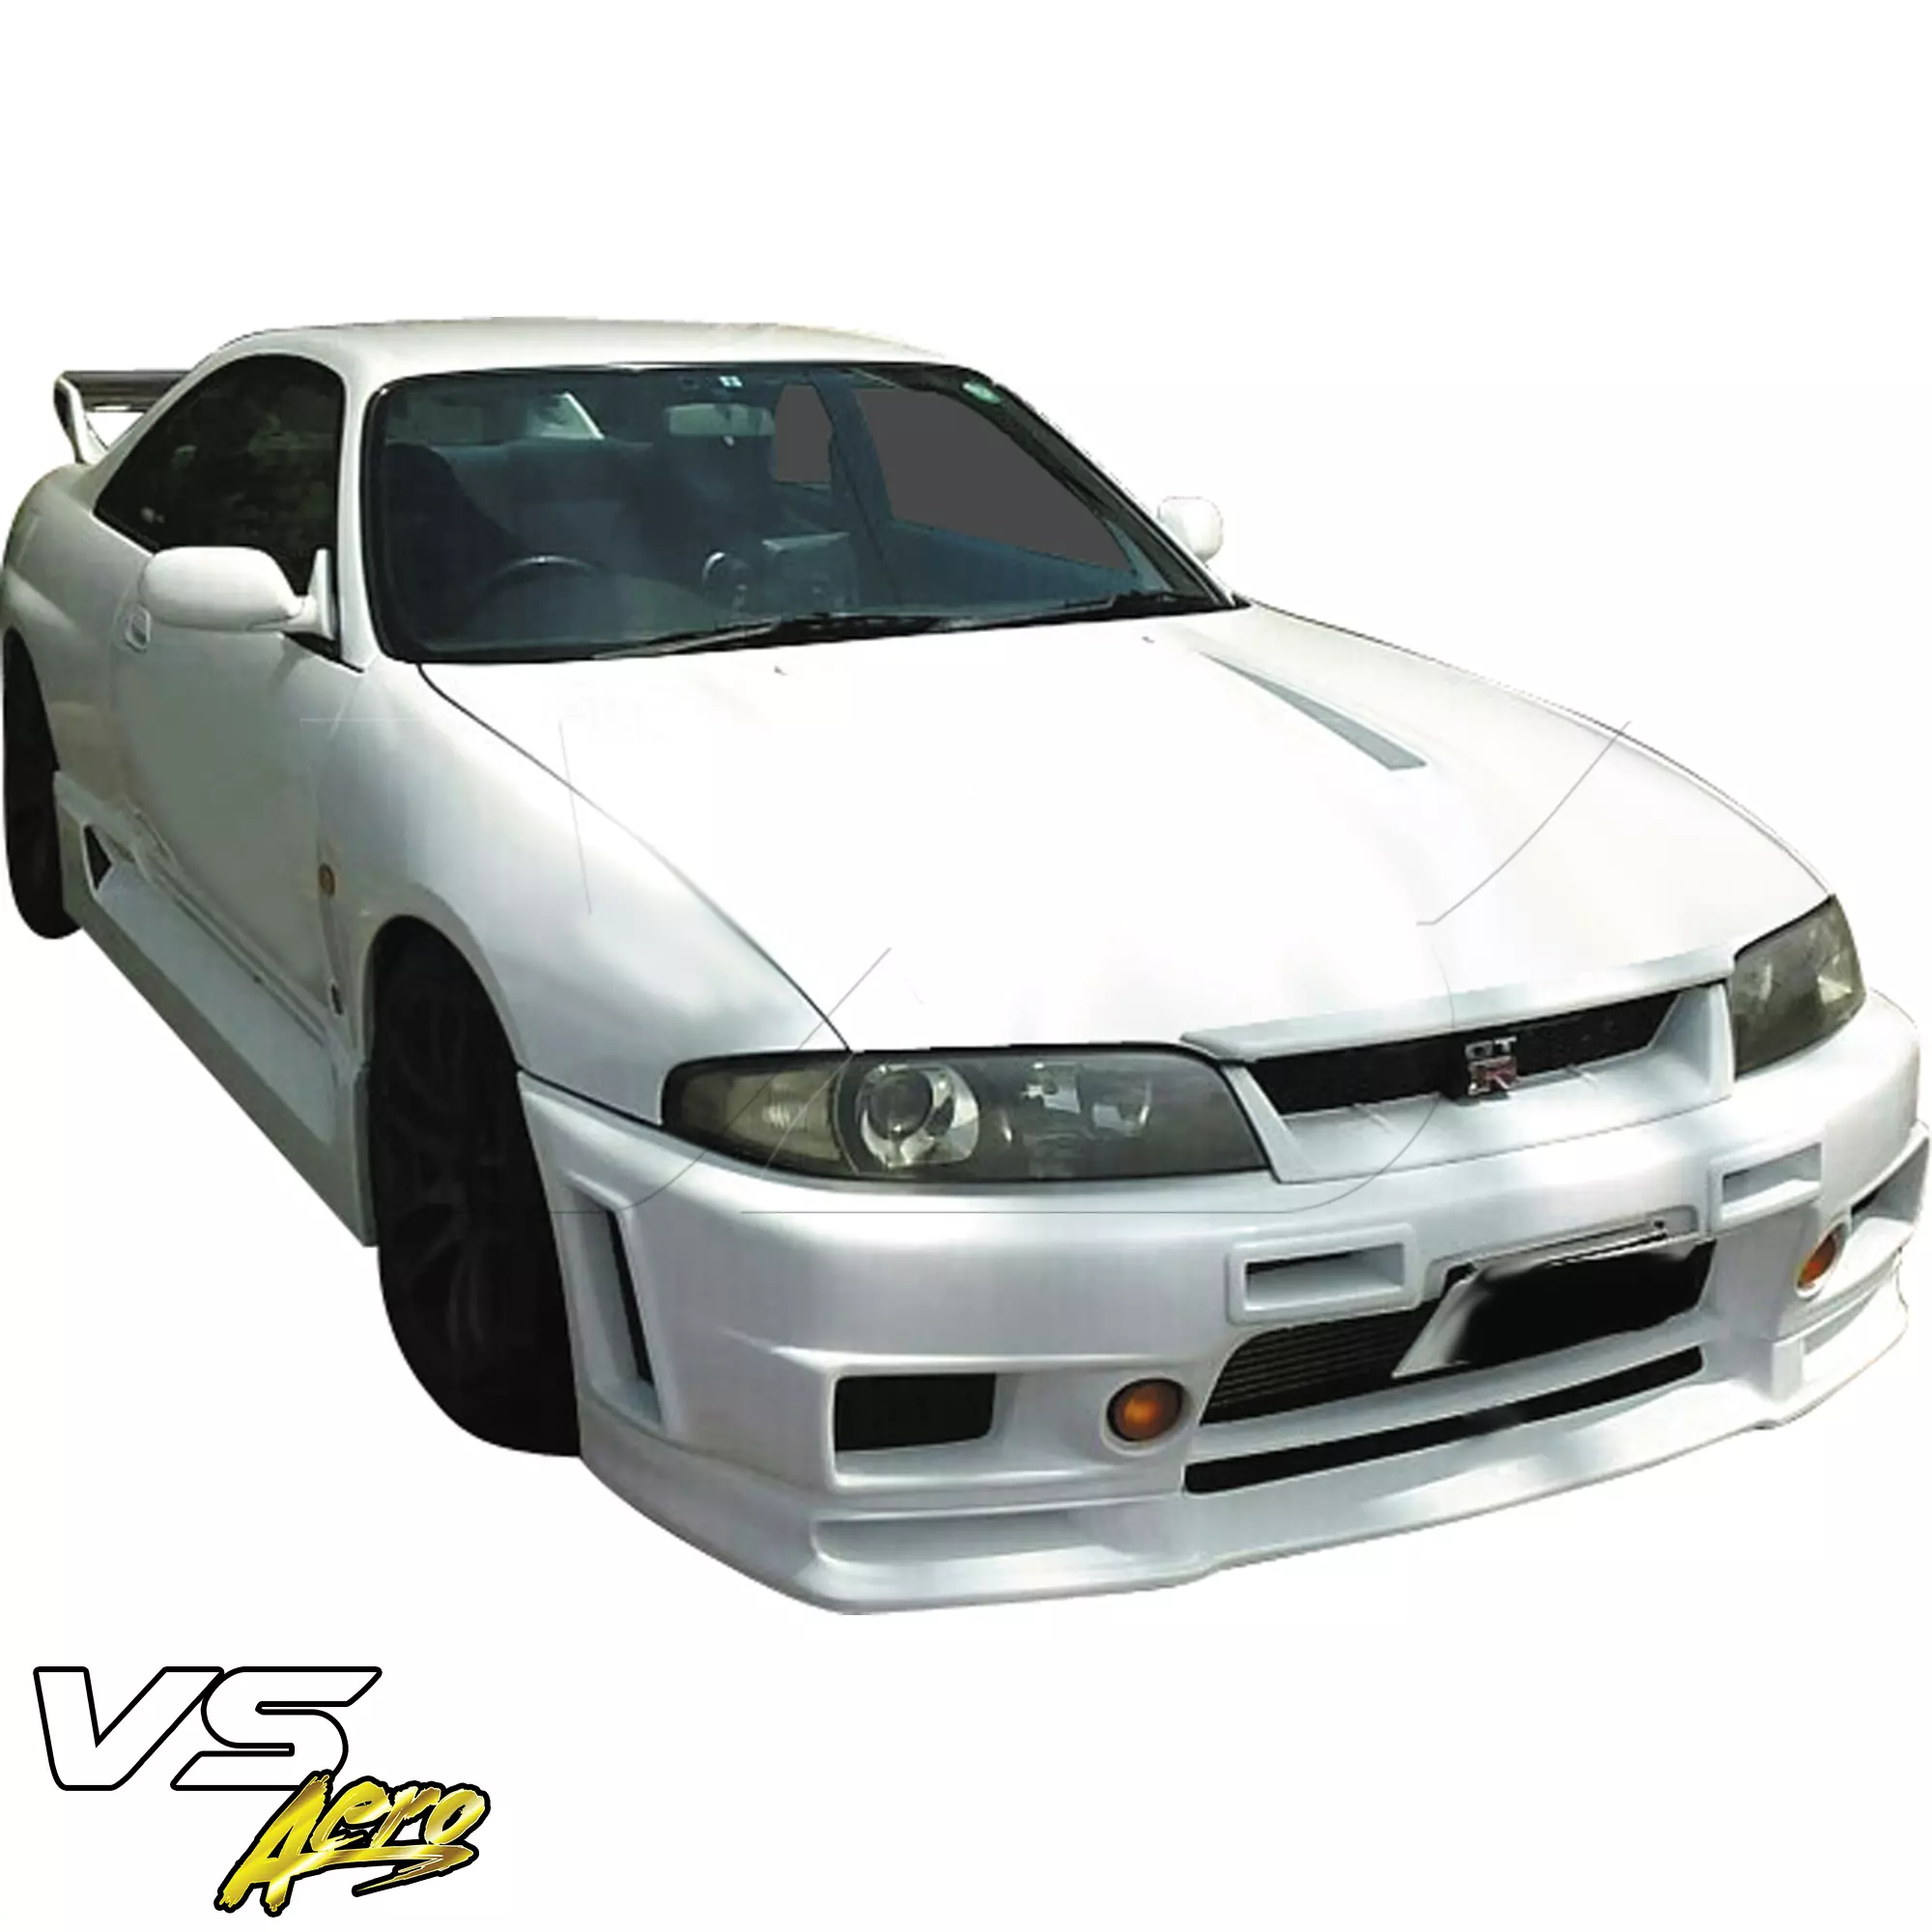 VSaero FRP NISM 400R Body Kit 4pc > Nissan Skyline R33 GTS 1995-1998 > 2dr Coupe - Image 4